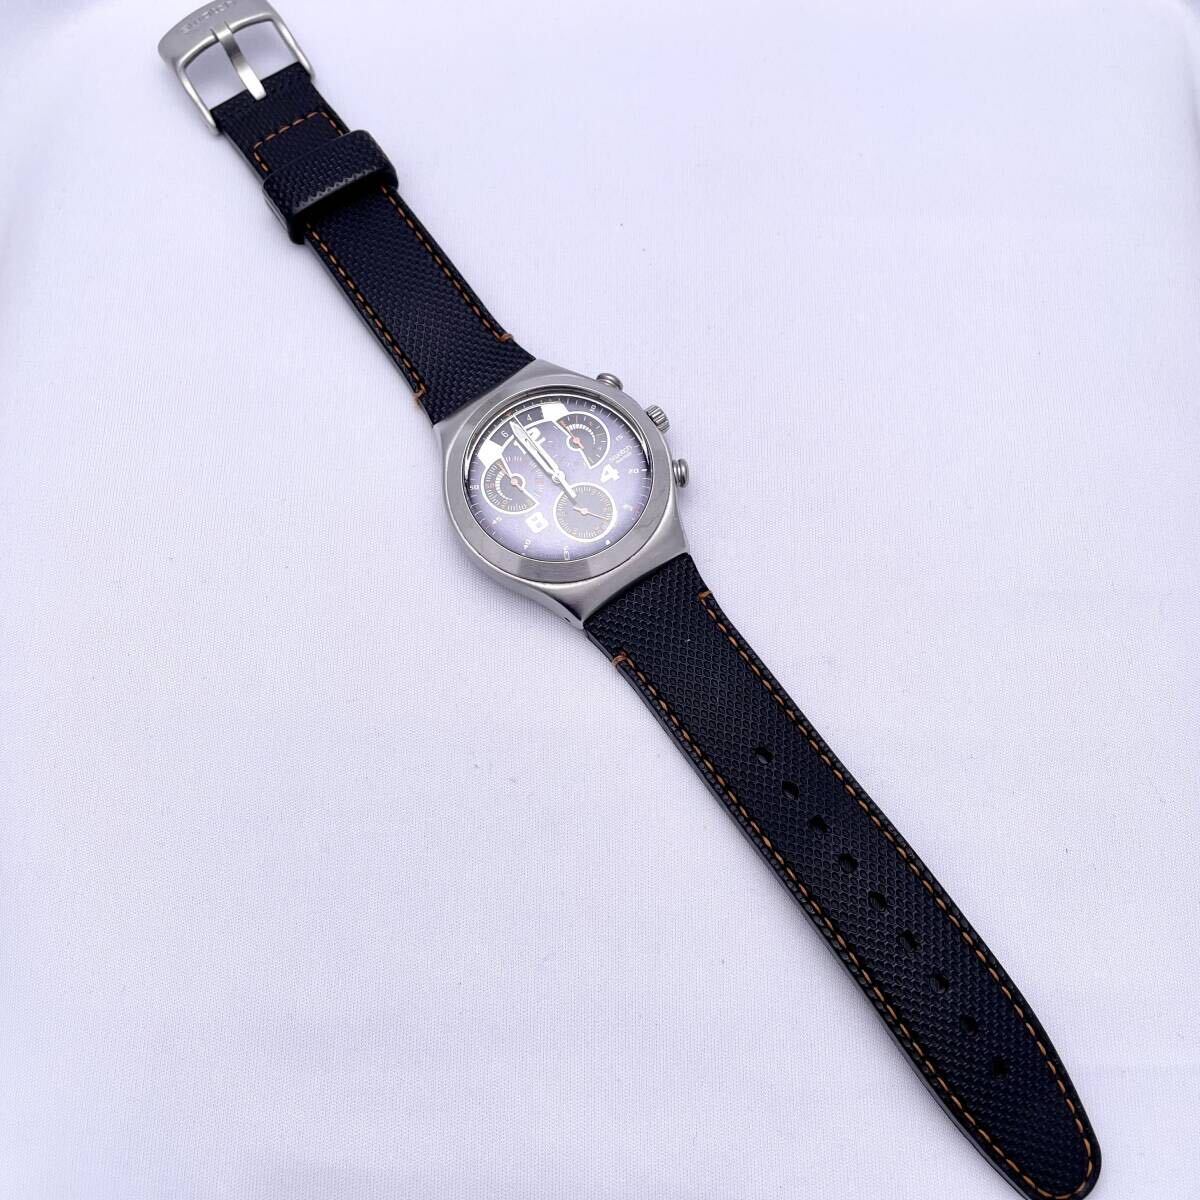 SWATCH Swatch IRONY Irony наручные часы часы кварц quartz SWISS MADE Швейцария производства 4 JEWELS 4 камень серебряный серебряный P260